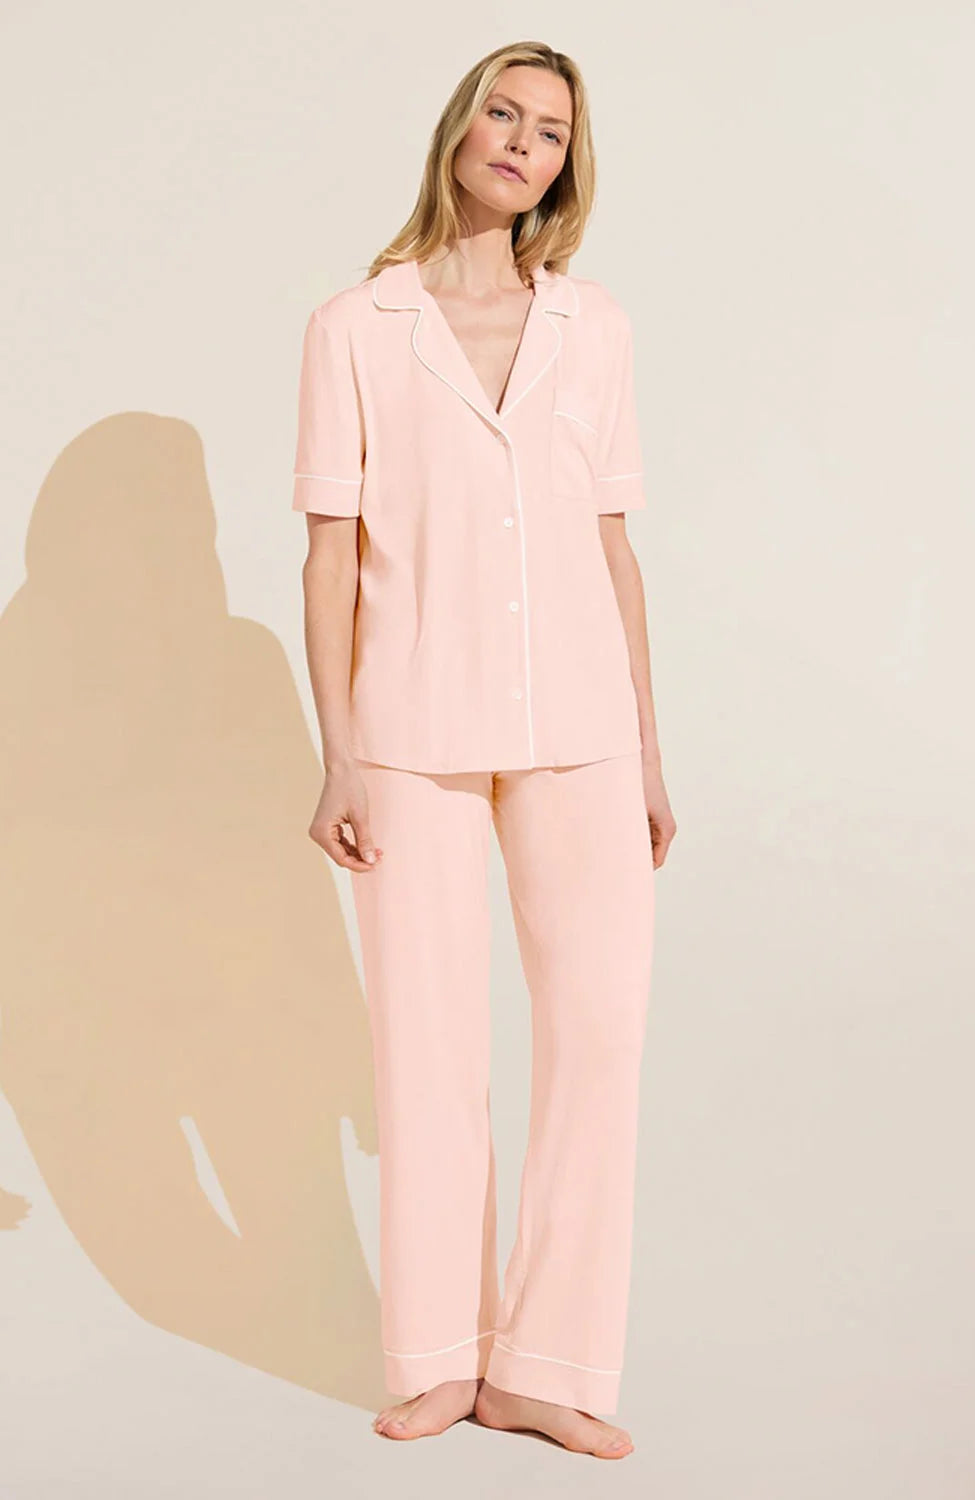 %shop_name_% Eberjey_Gisele Tencel Short Sleeve Long Pant Pajama Set _ Loungewear_ 1150.00